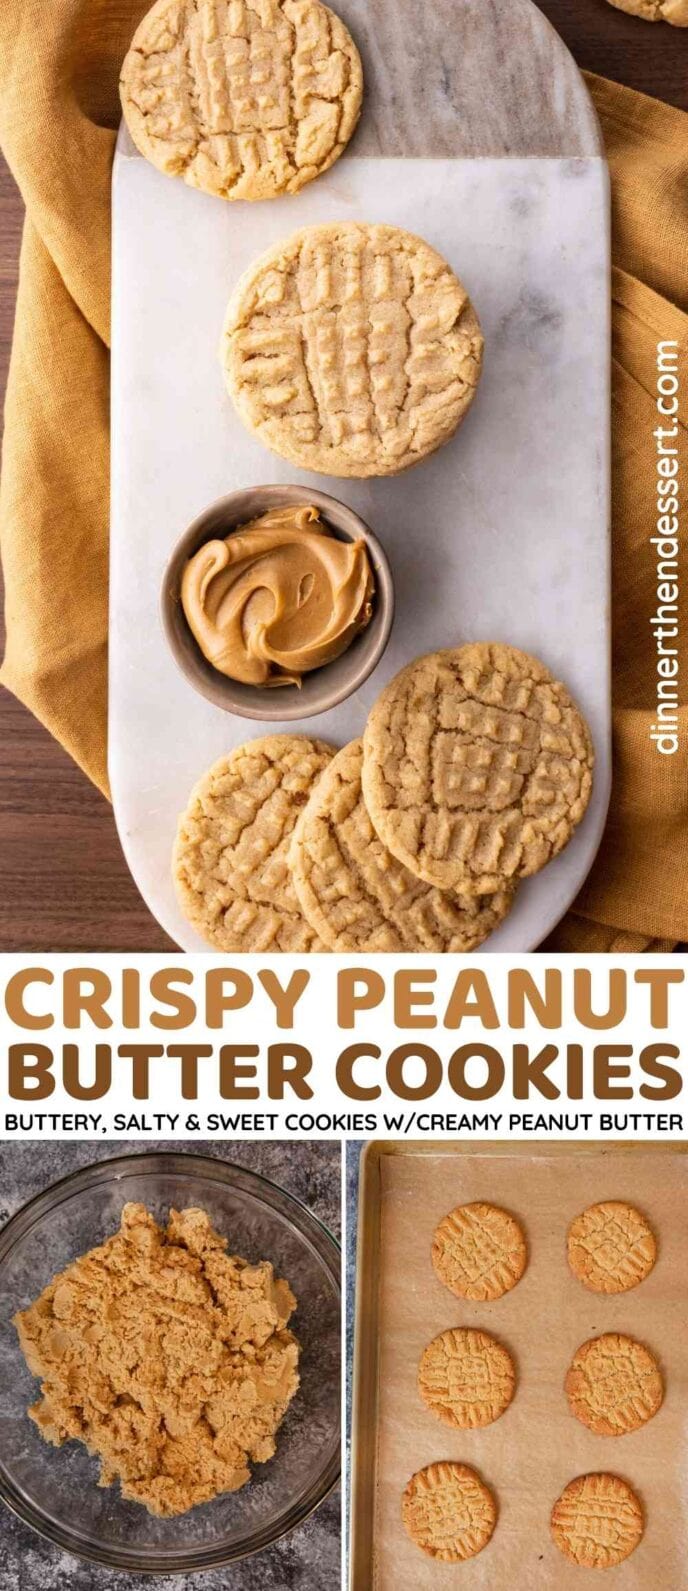 Crispy Peanut Butter Cookies Collage